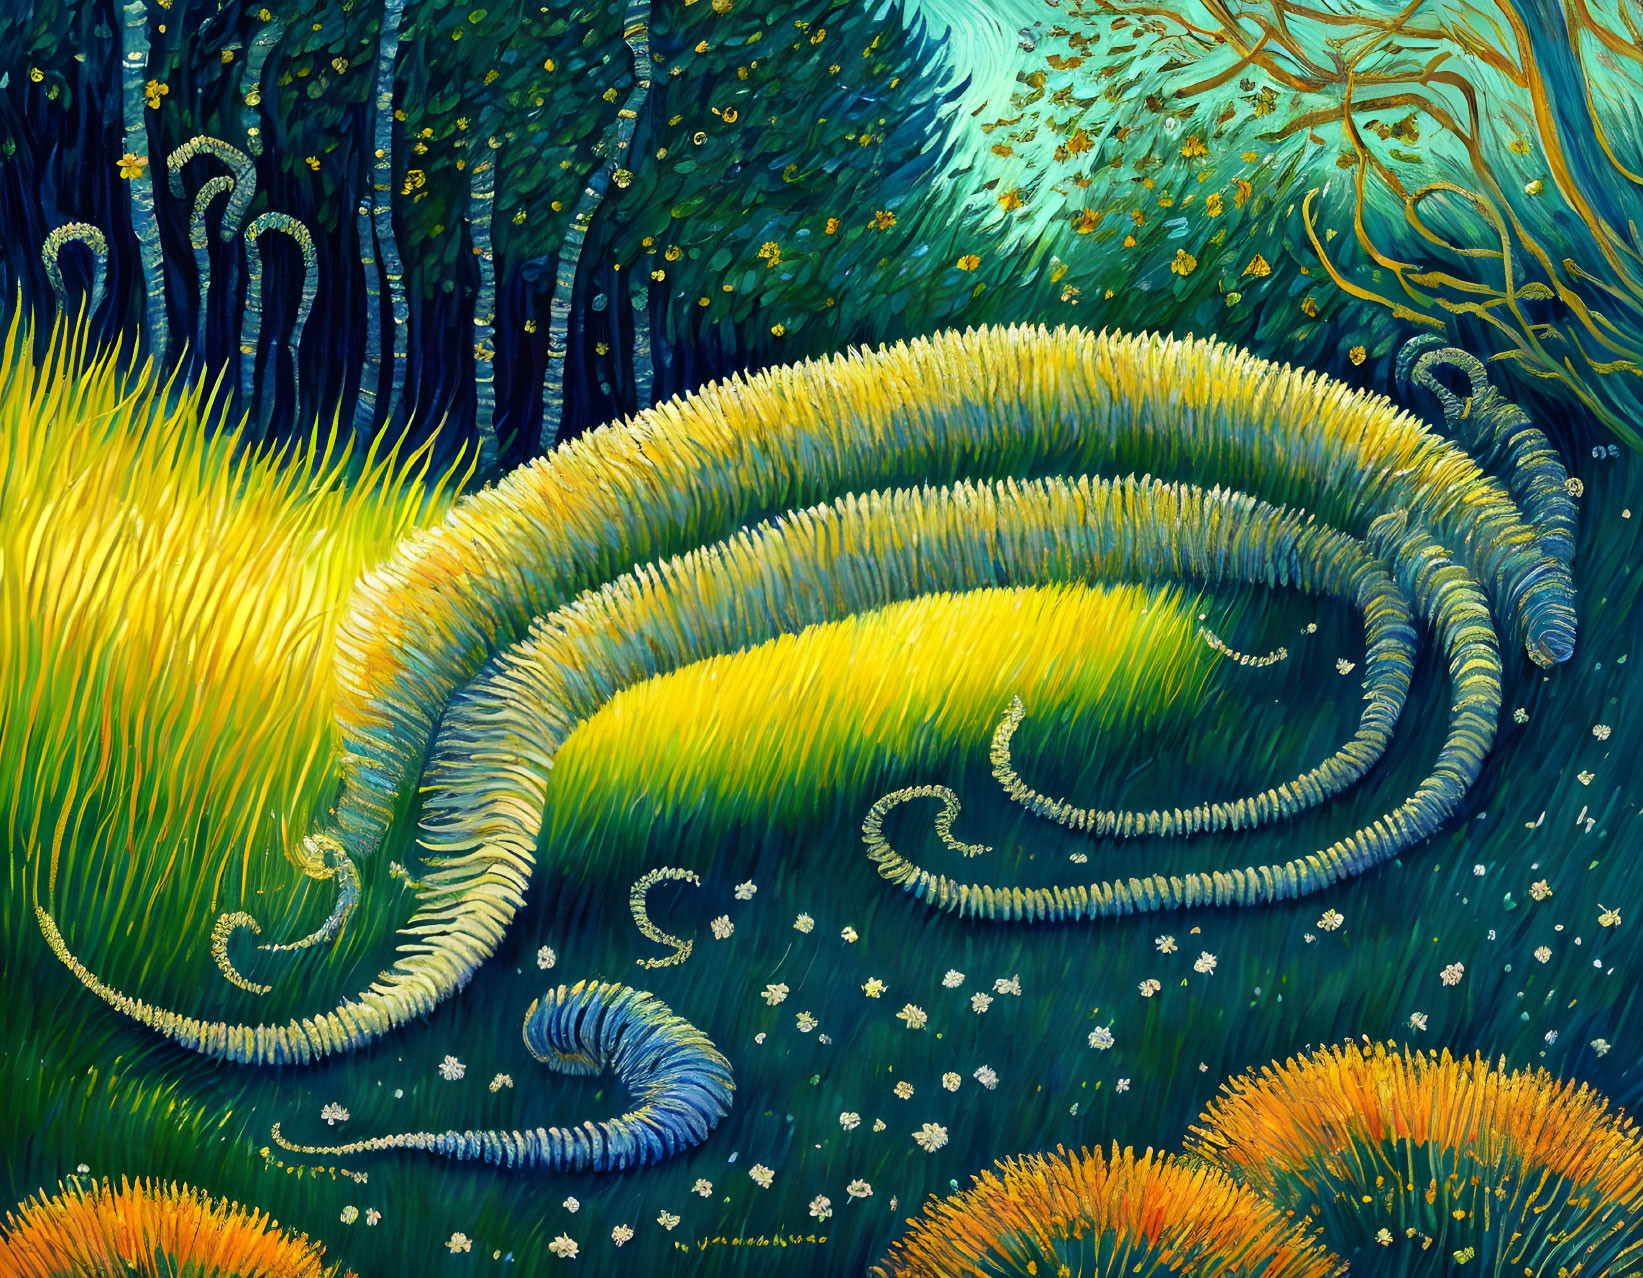 Colorful Serpent-Like Creature in Fantasy Landscape